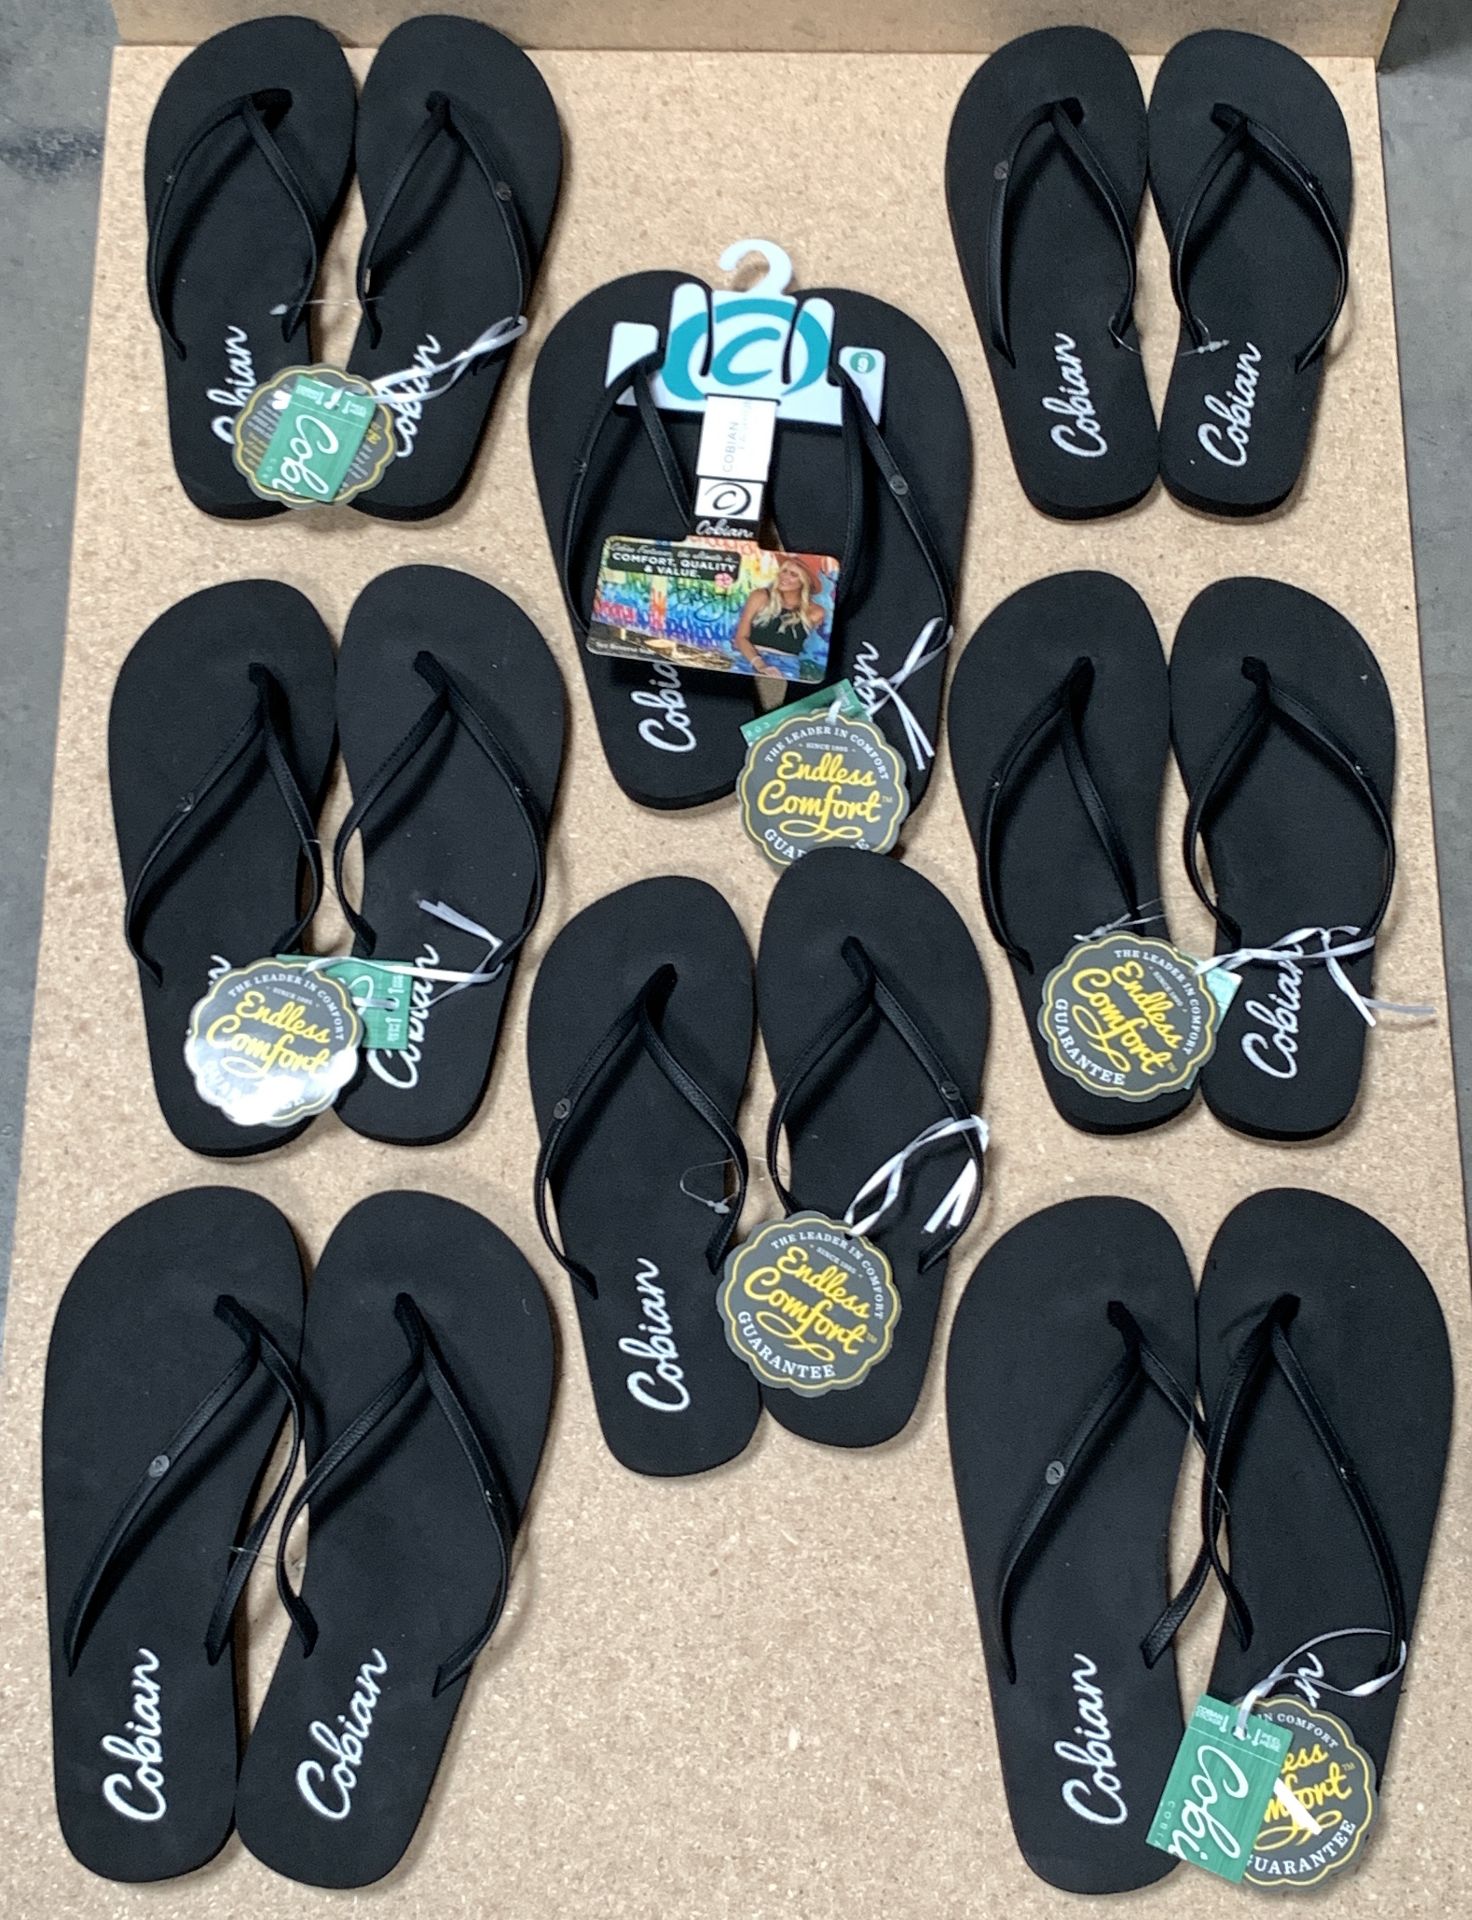 8 Pairs Cobian Flip Flop Sandals, Nias Bounce Black, New w. Tags, Various Sizes (Retail $264)